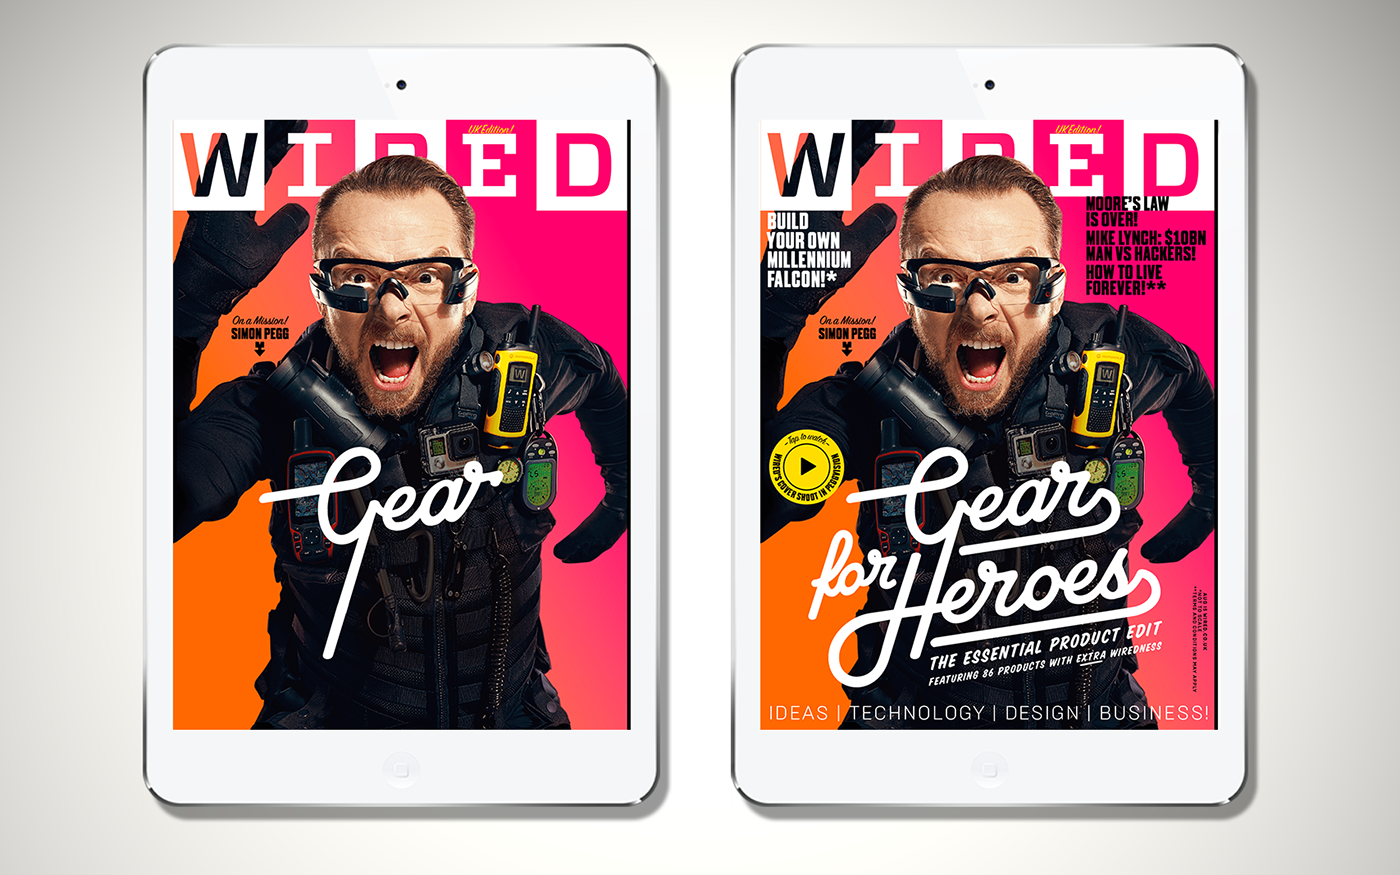 Wired magazine iPad conde nast Dwell interactive video Simon Pegg